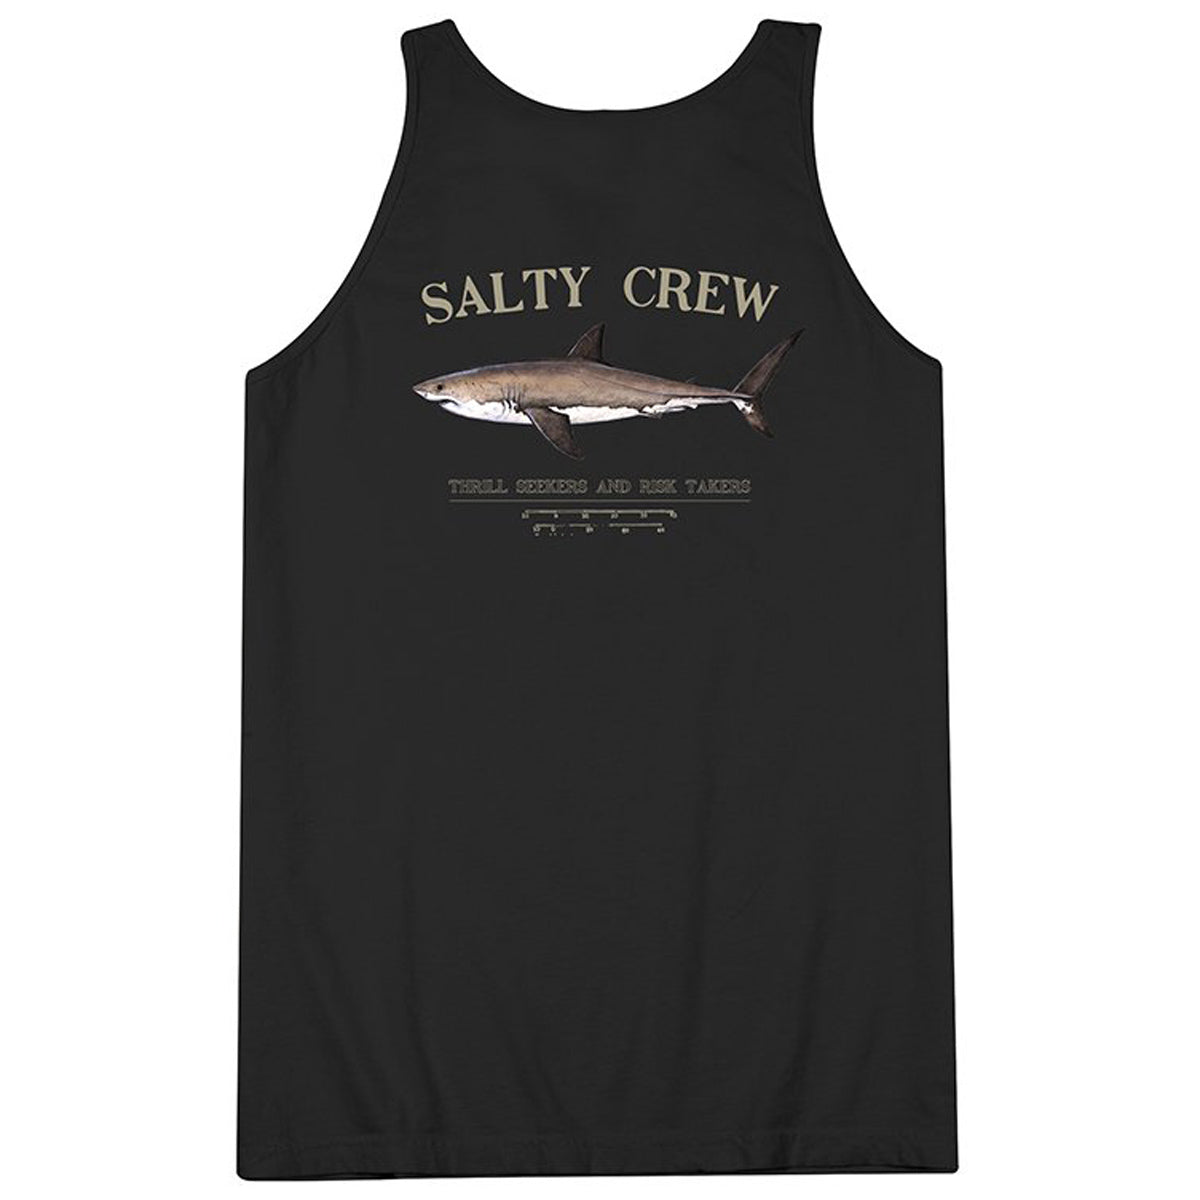 Salty Crew Bruce Tank Top - Black image 2